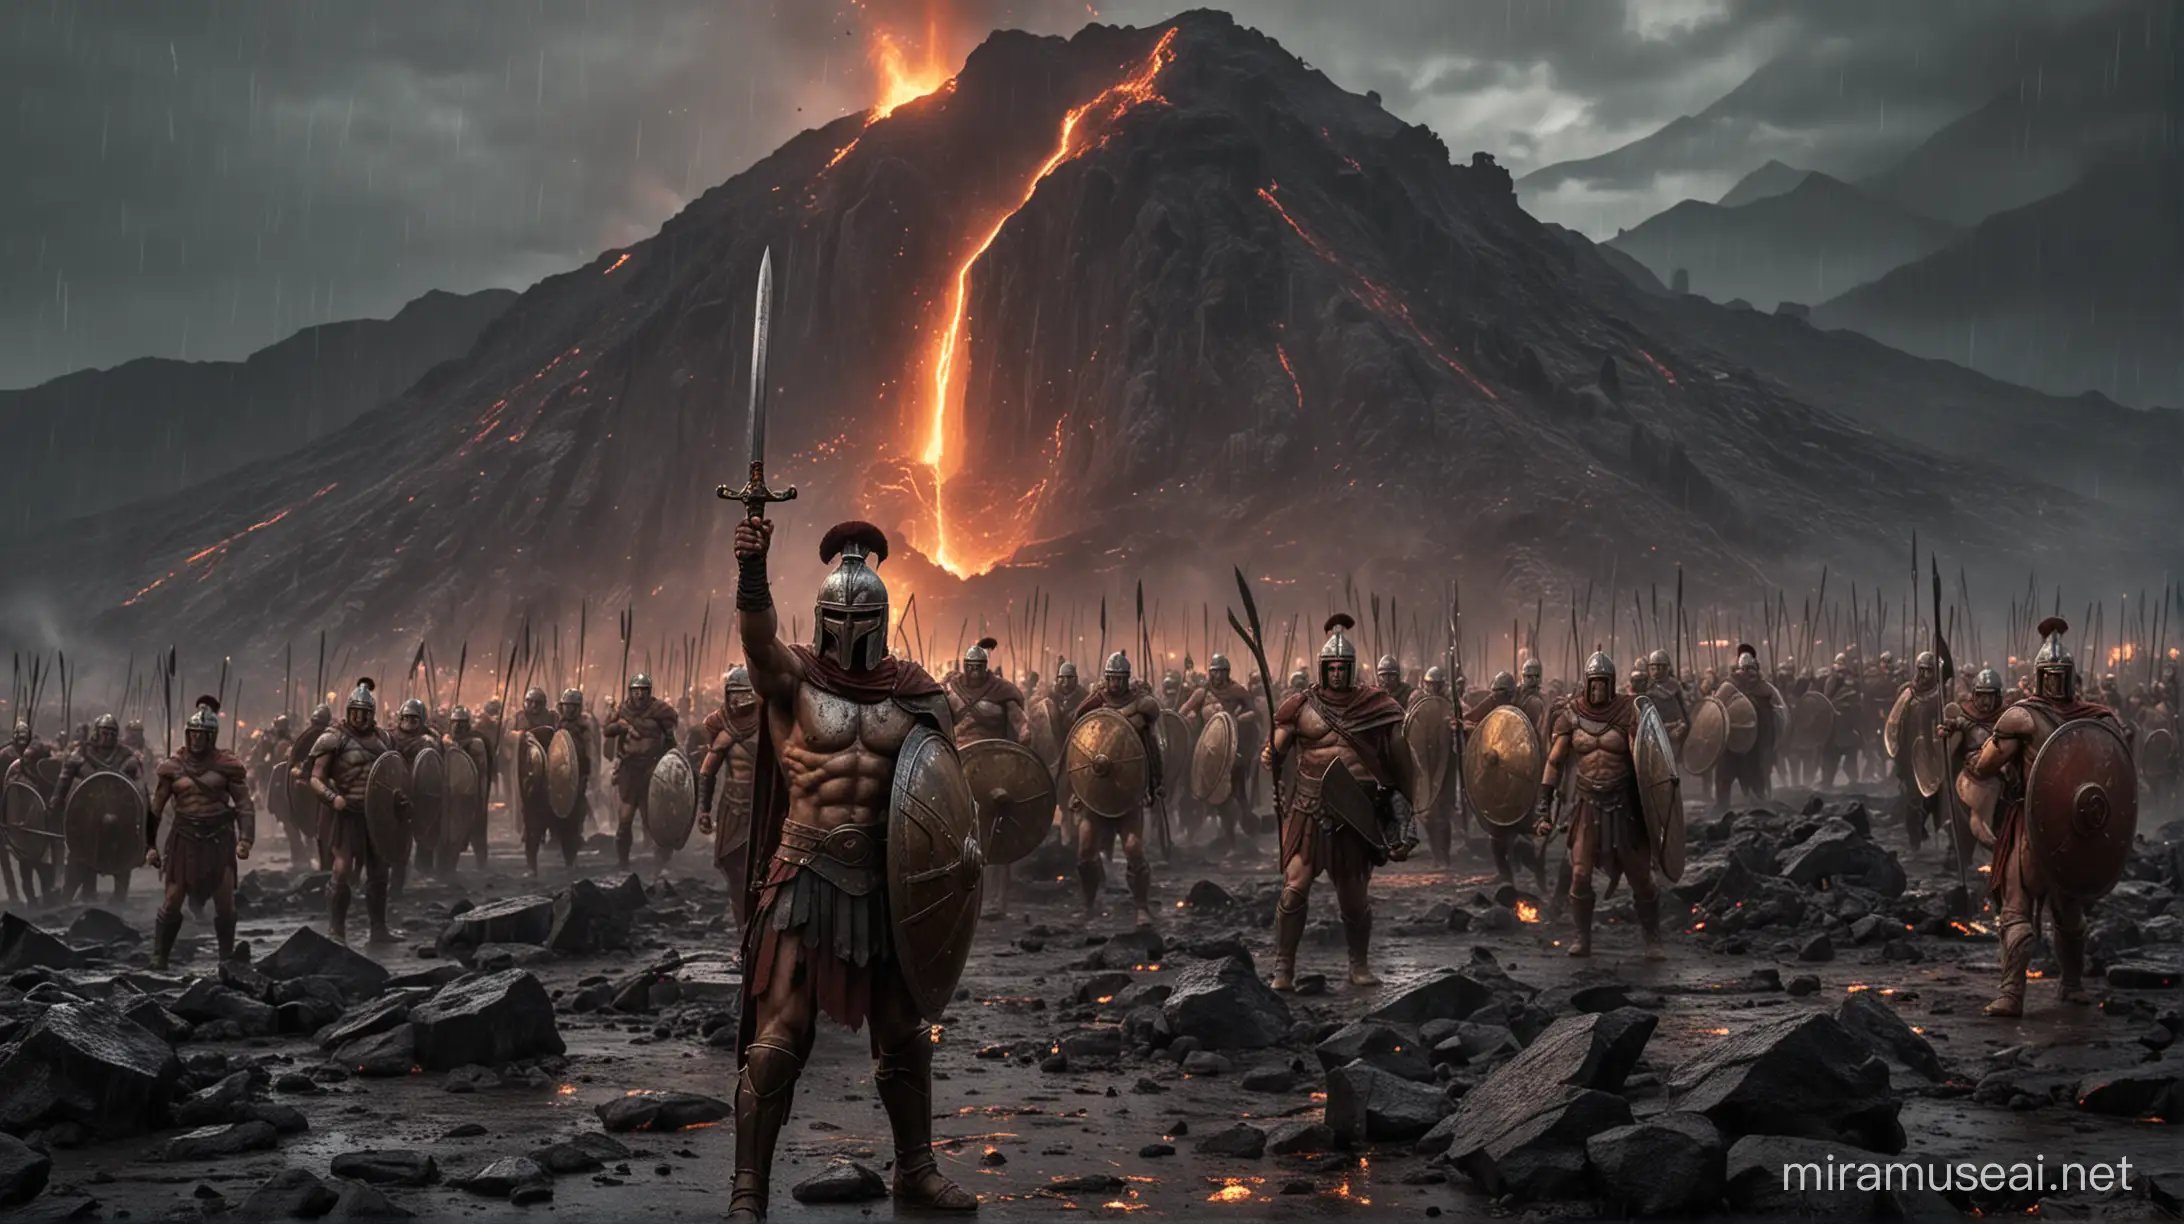 Spartan Warriors Triumphing Amidst Volcanic Eruption